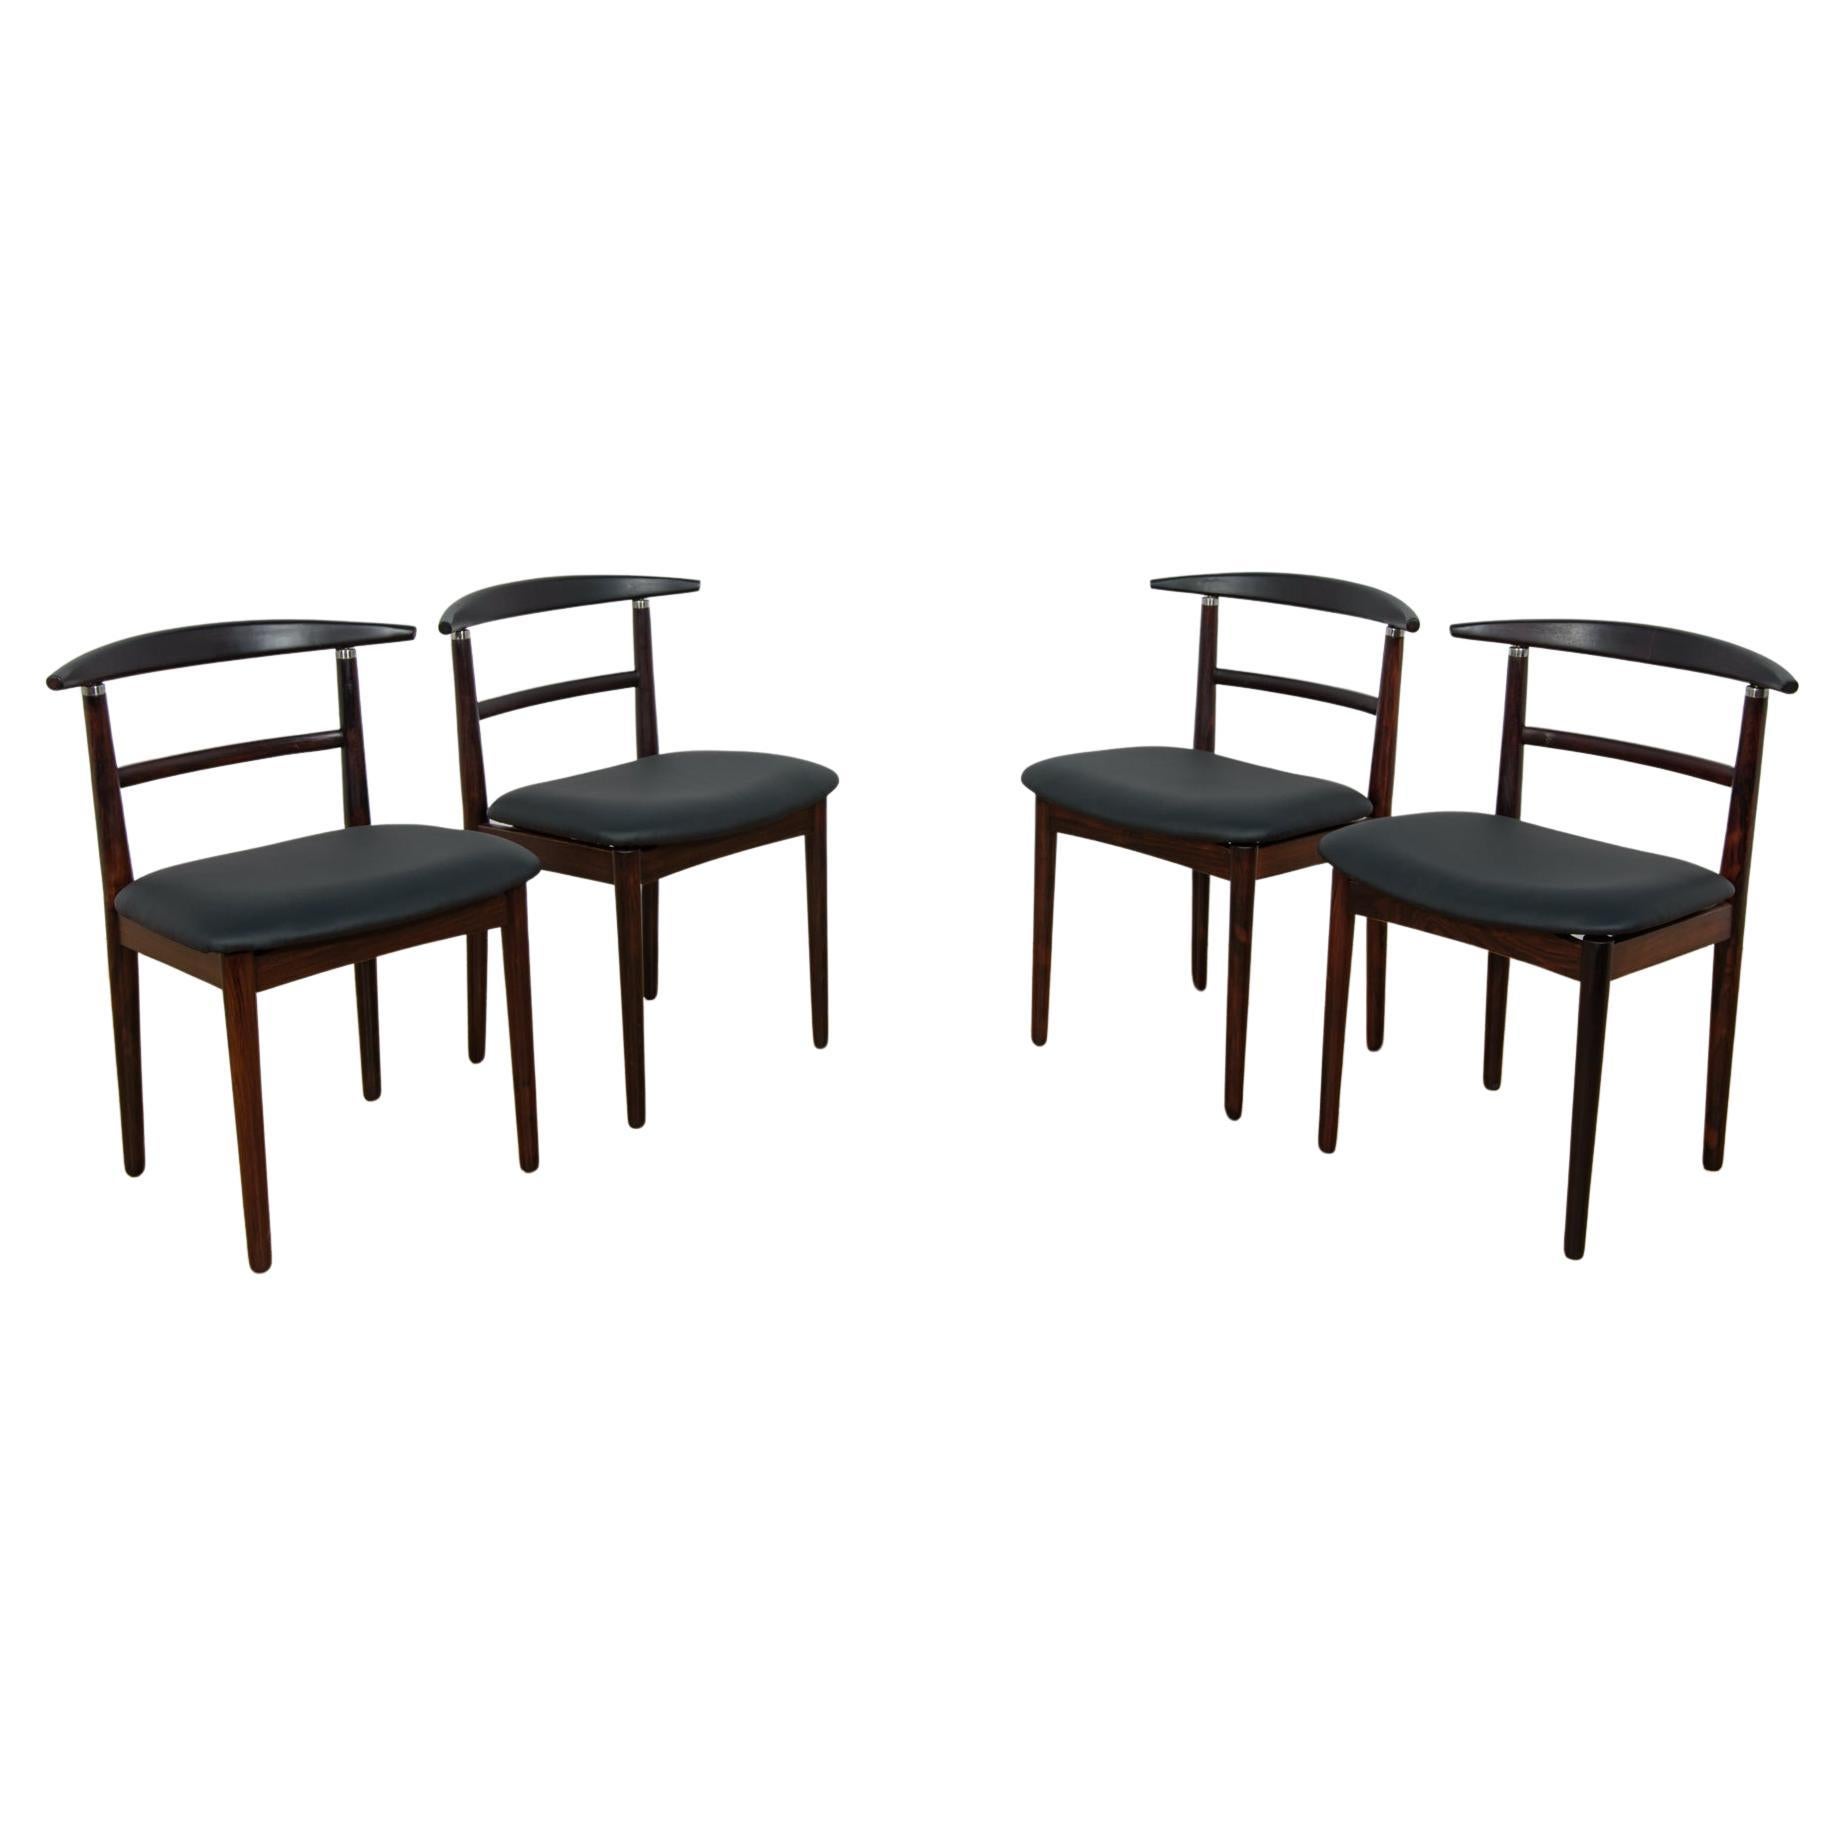 Rosewood Dining Chairs by Helge Sibast & Børge Rammerskov, Denmark, 1960s.